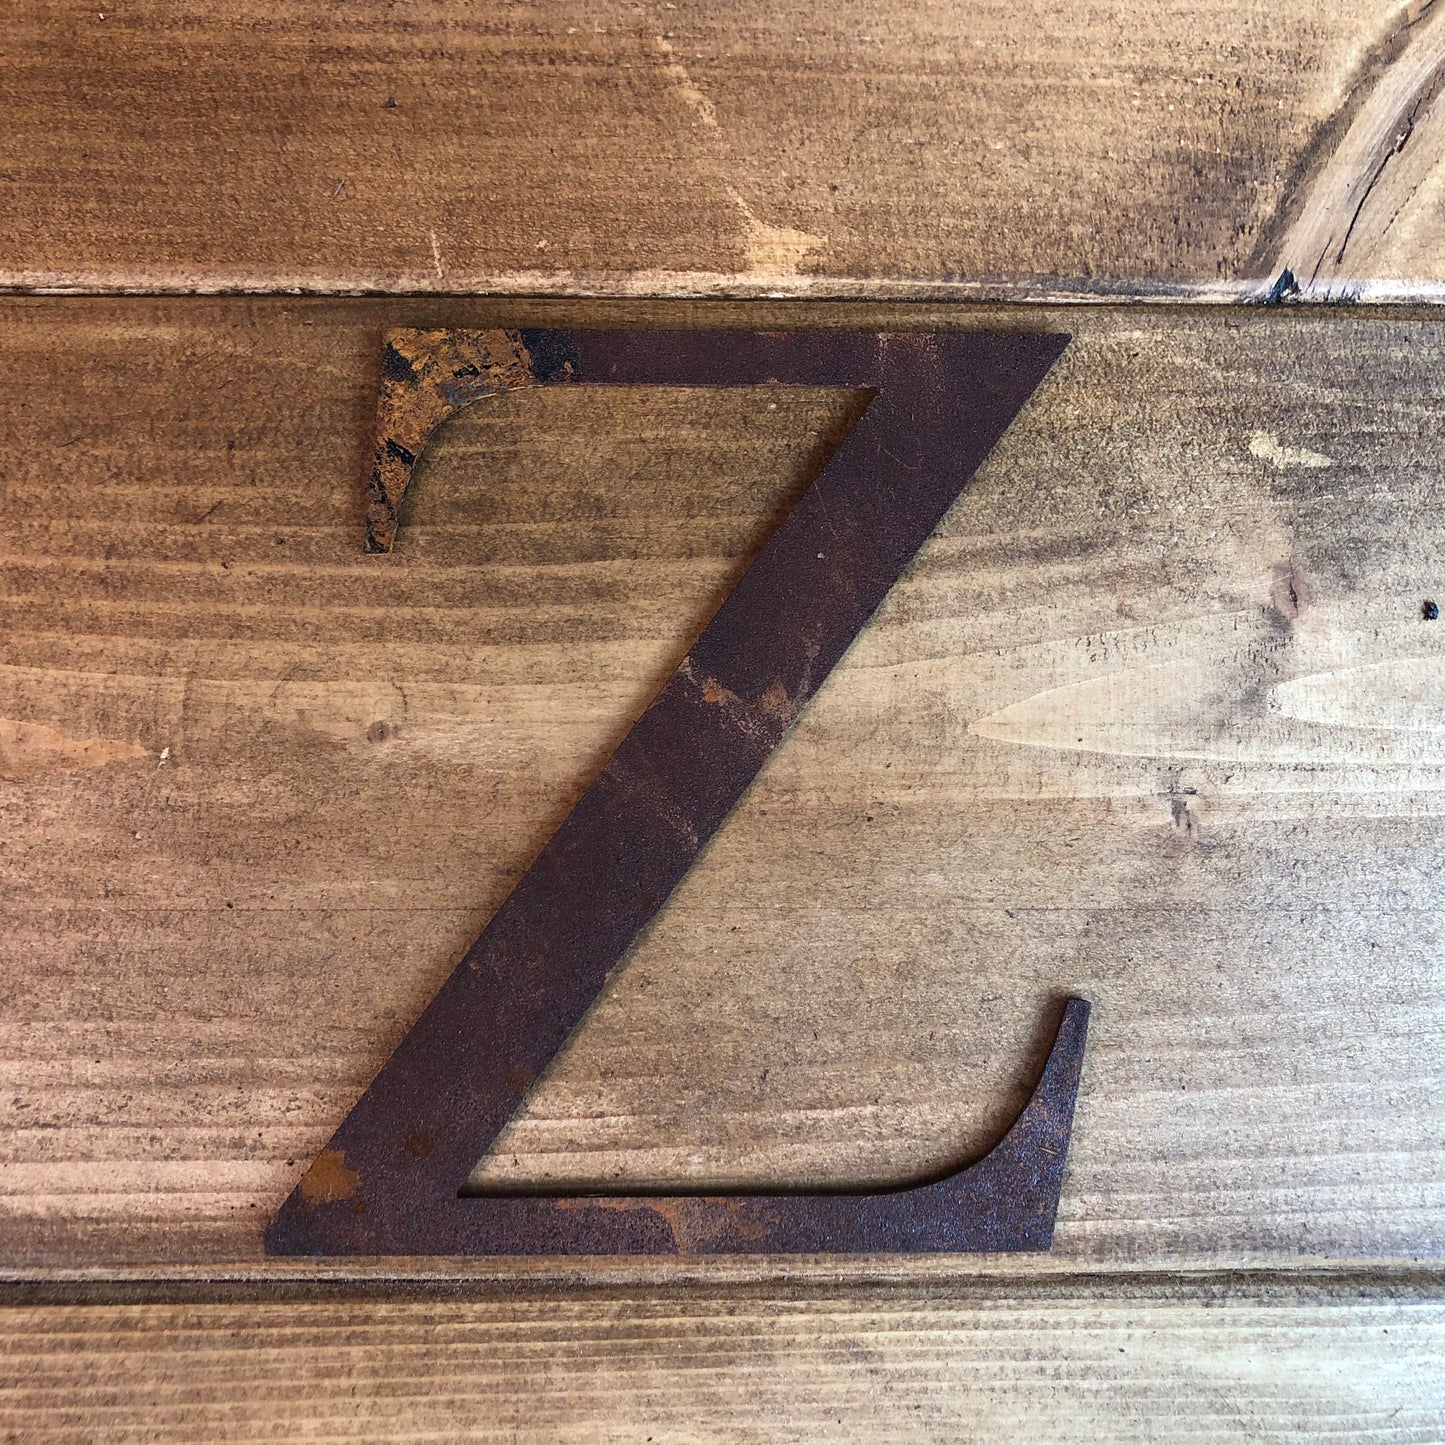 5" Classic Font Rusty Metal Alphabet Letters A-Z 0-9